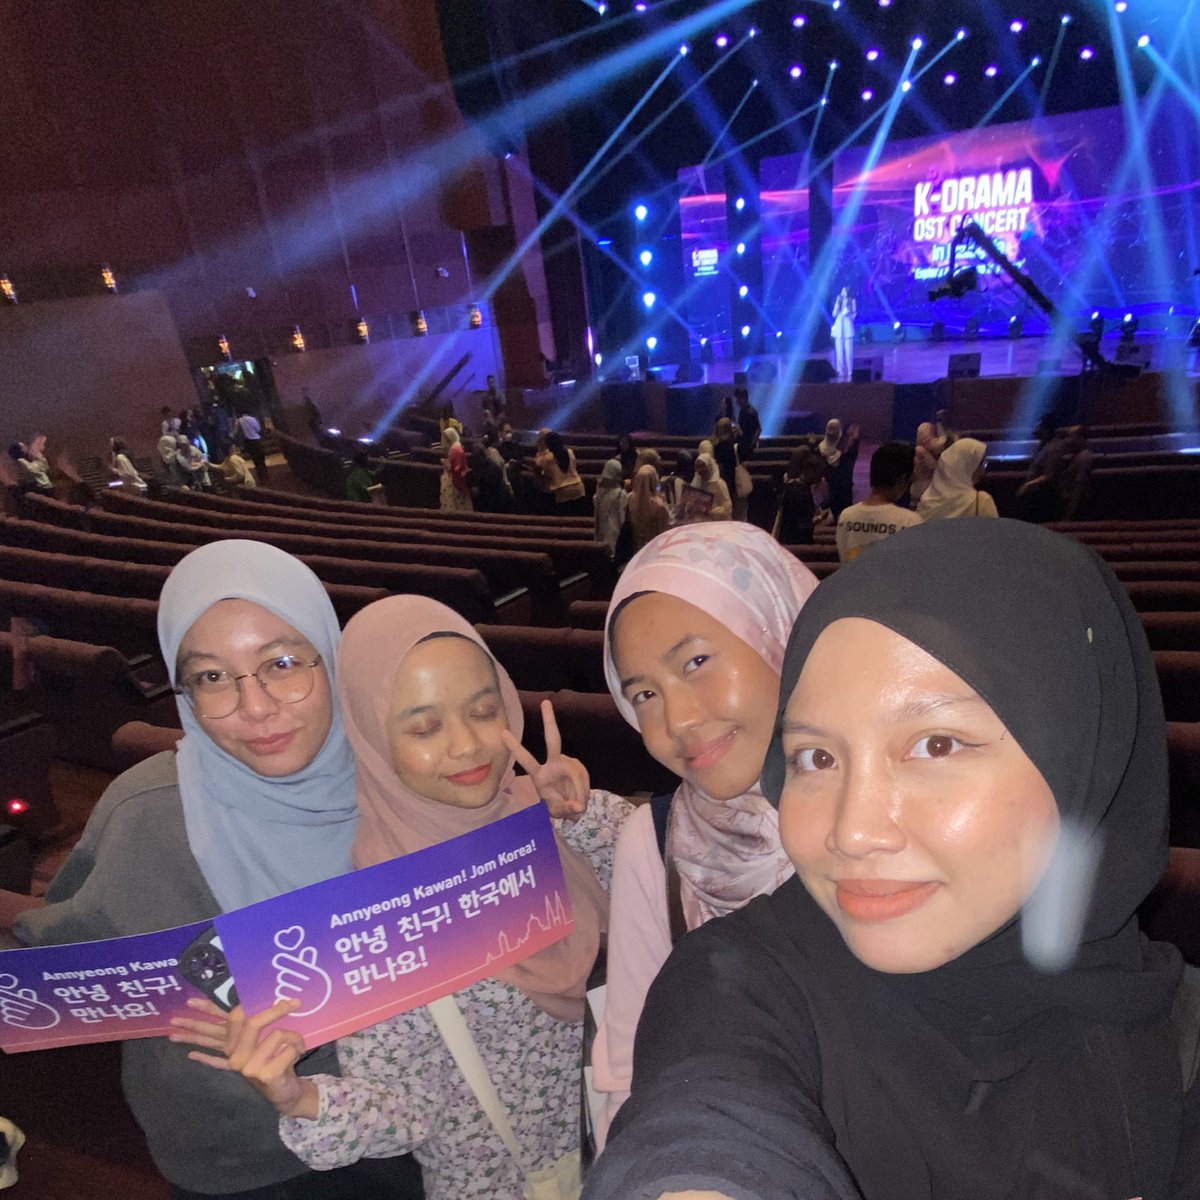 the k-ost concert was lit! 
#AnnyeongKawan #KTO_Malaysia #KoreaTravelFest2023 #VisitKoreaYear #VisitKoreaYear2023 #RideTheKoreanWave